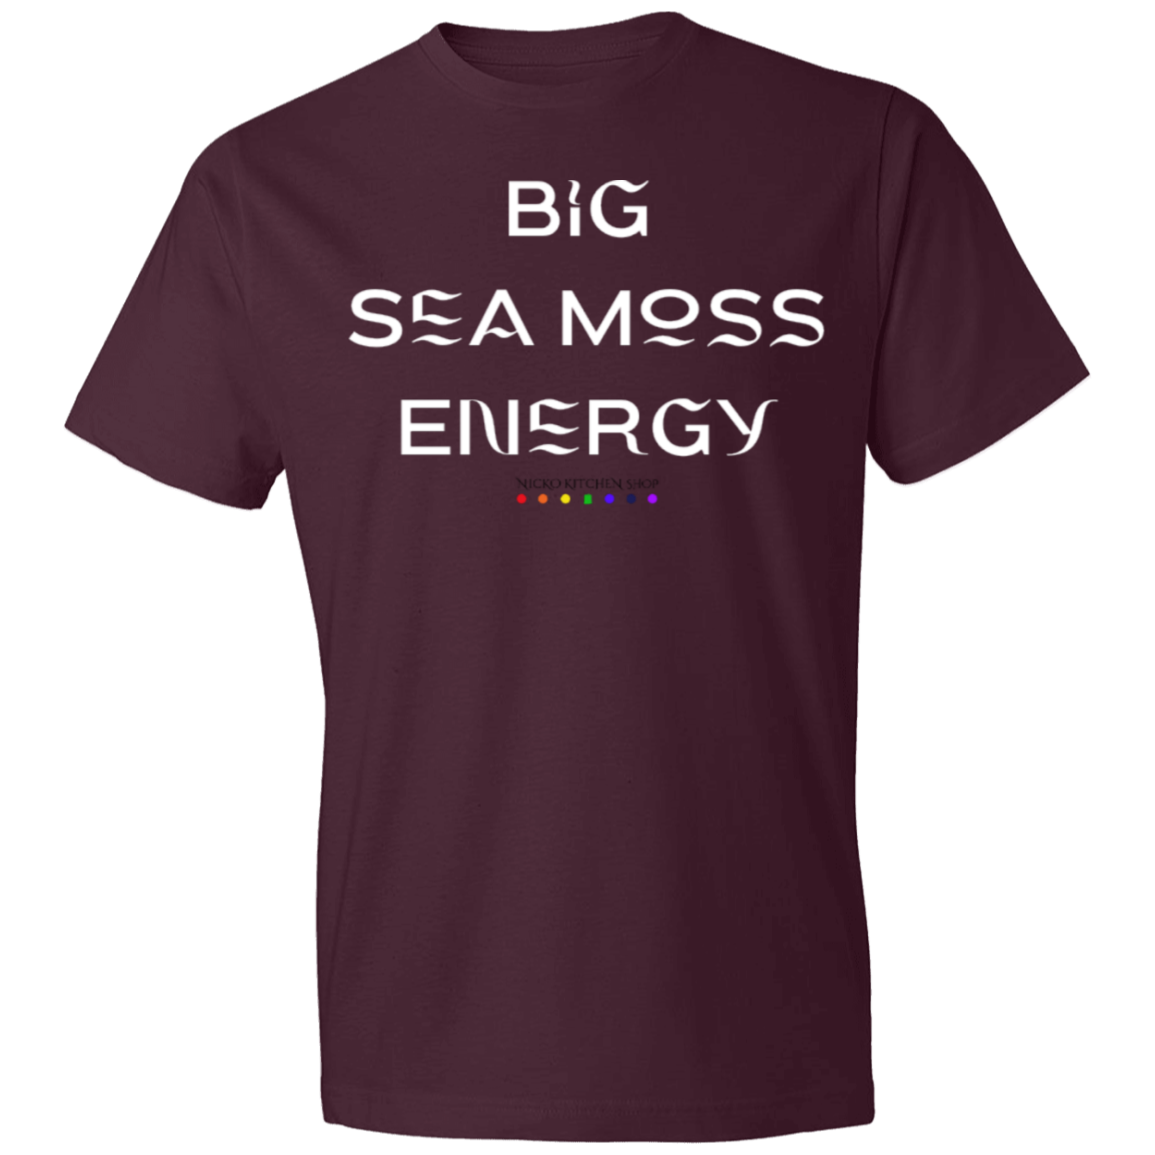 Big Seamoss Wavy T-Shirt - White Text